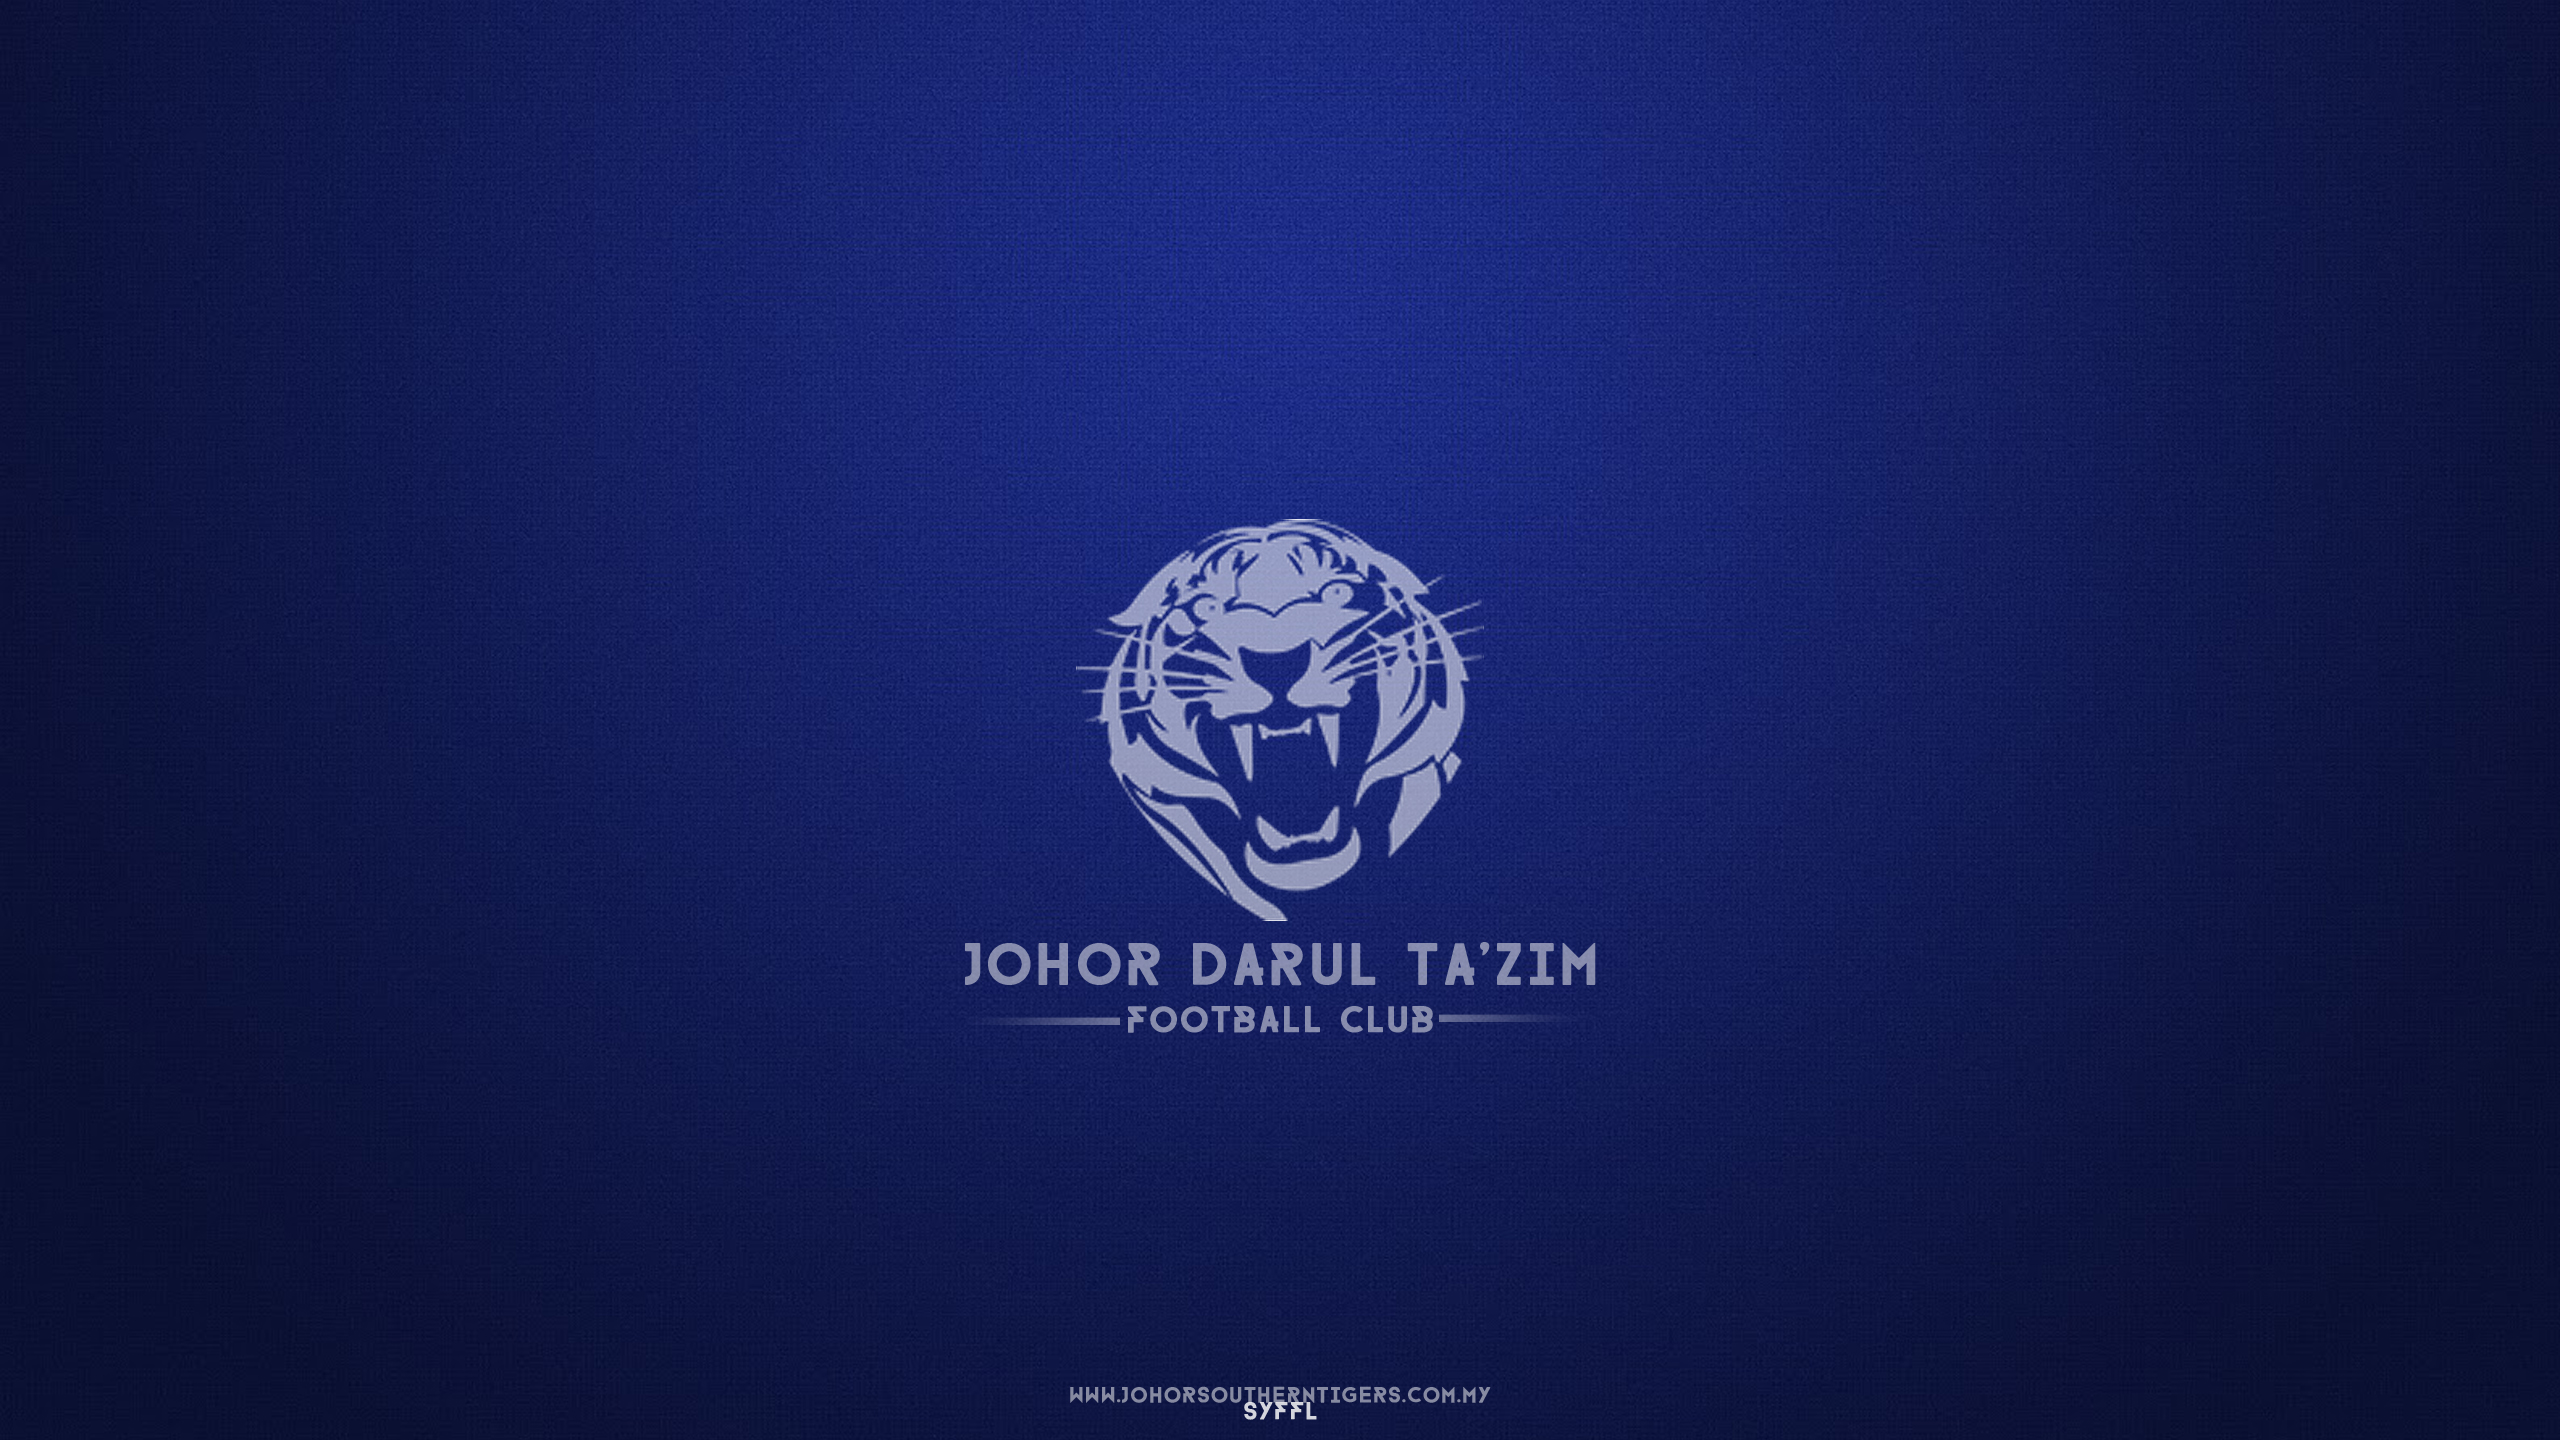 Johor Darul Takzim JDT logo wallpaper 13 by TheSYFFL on deviantART